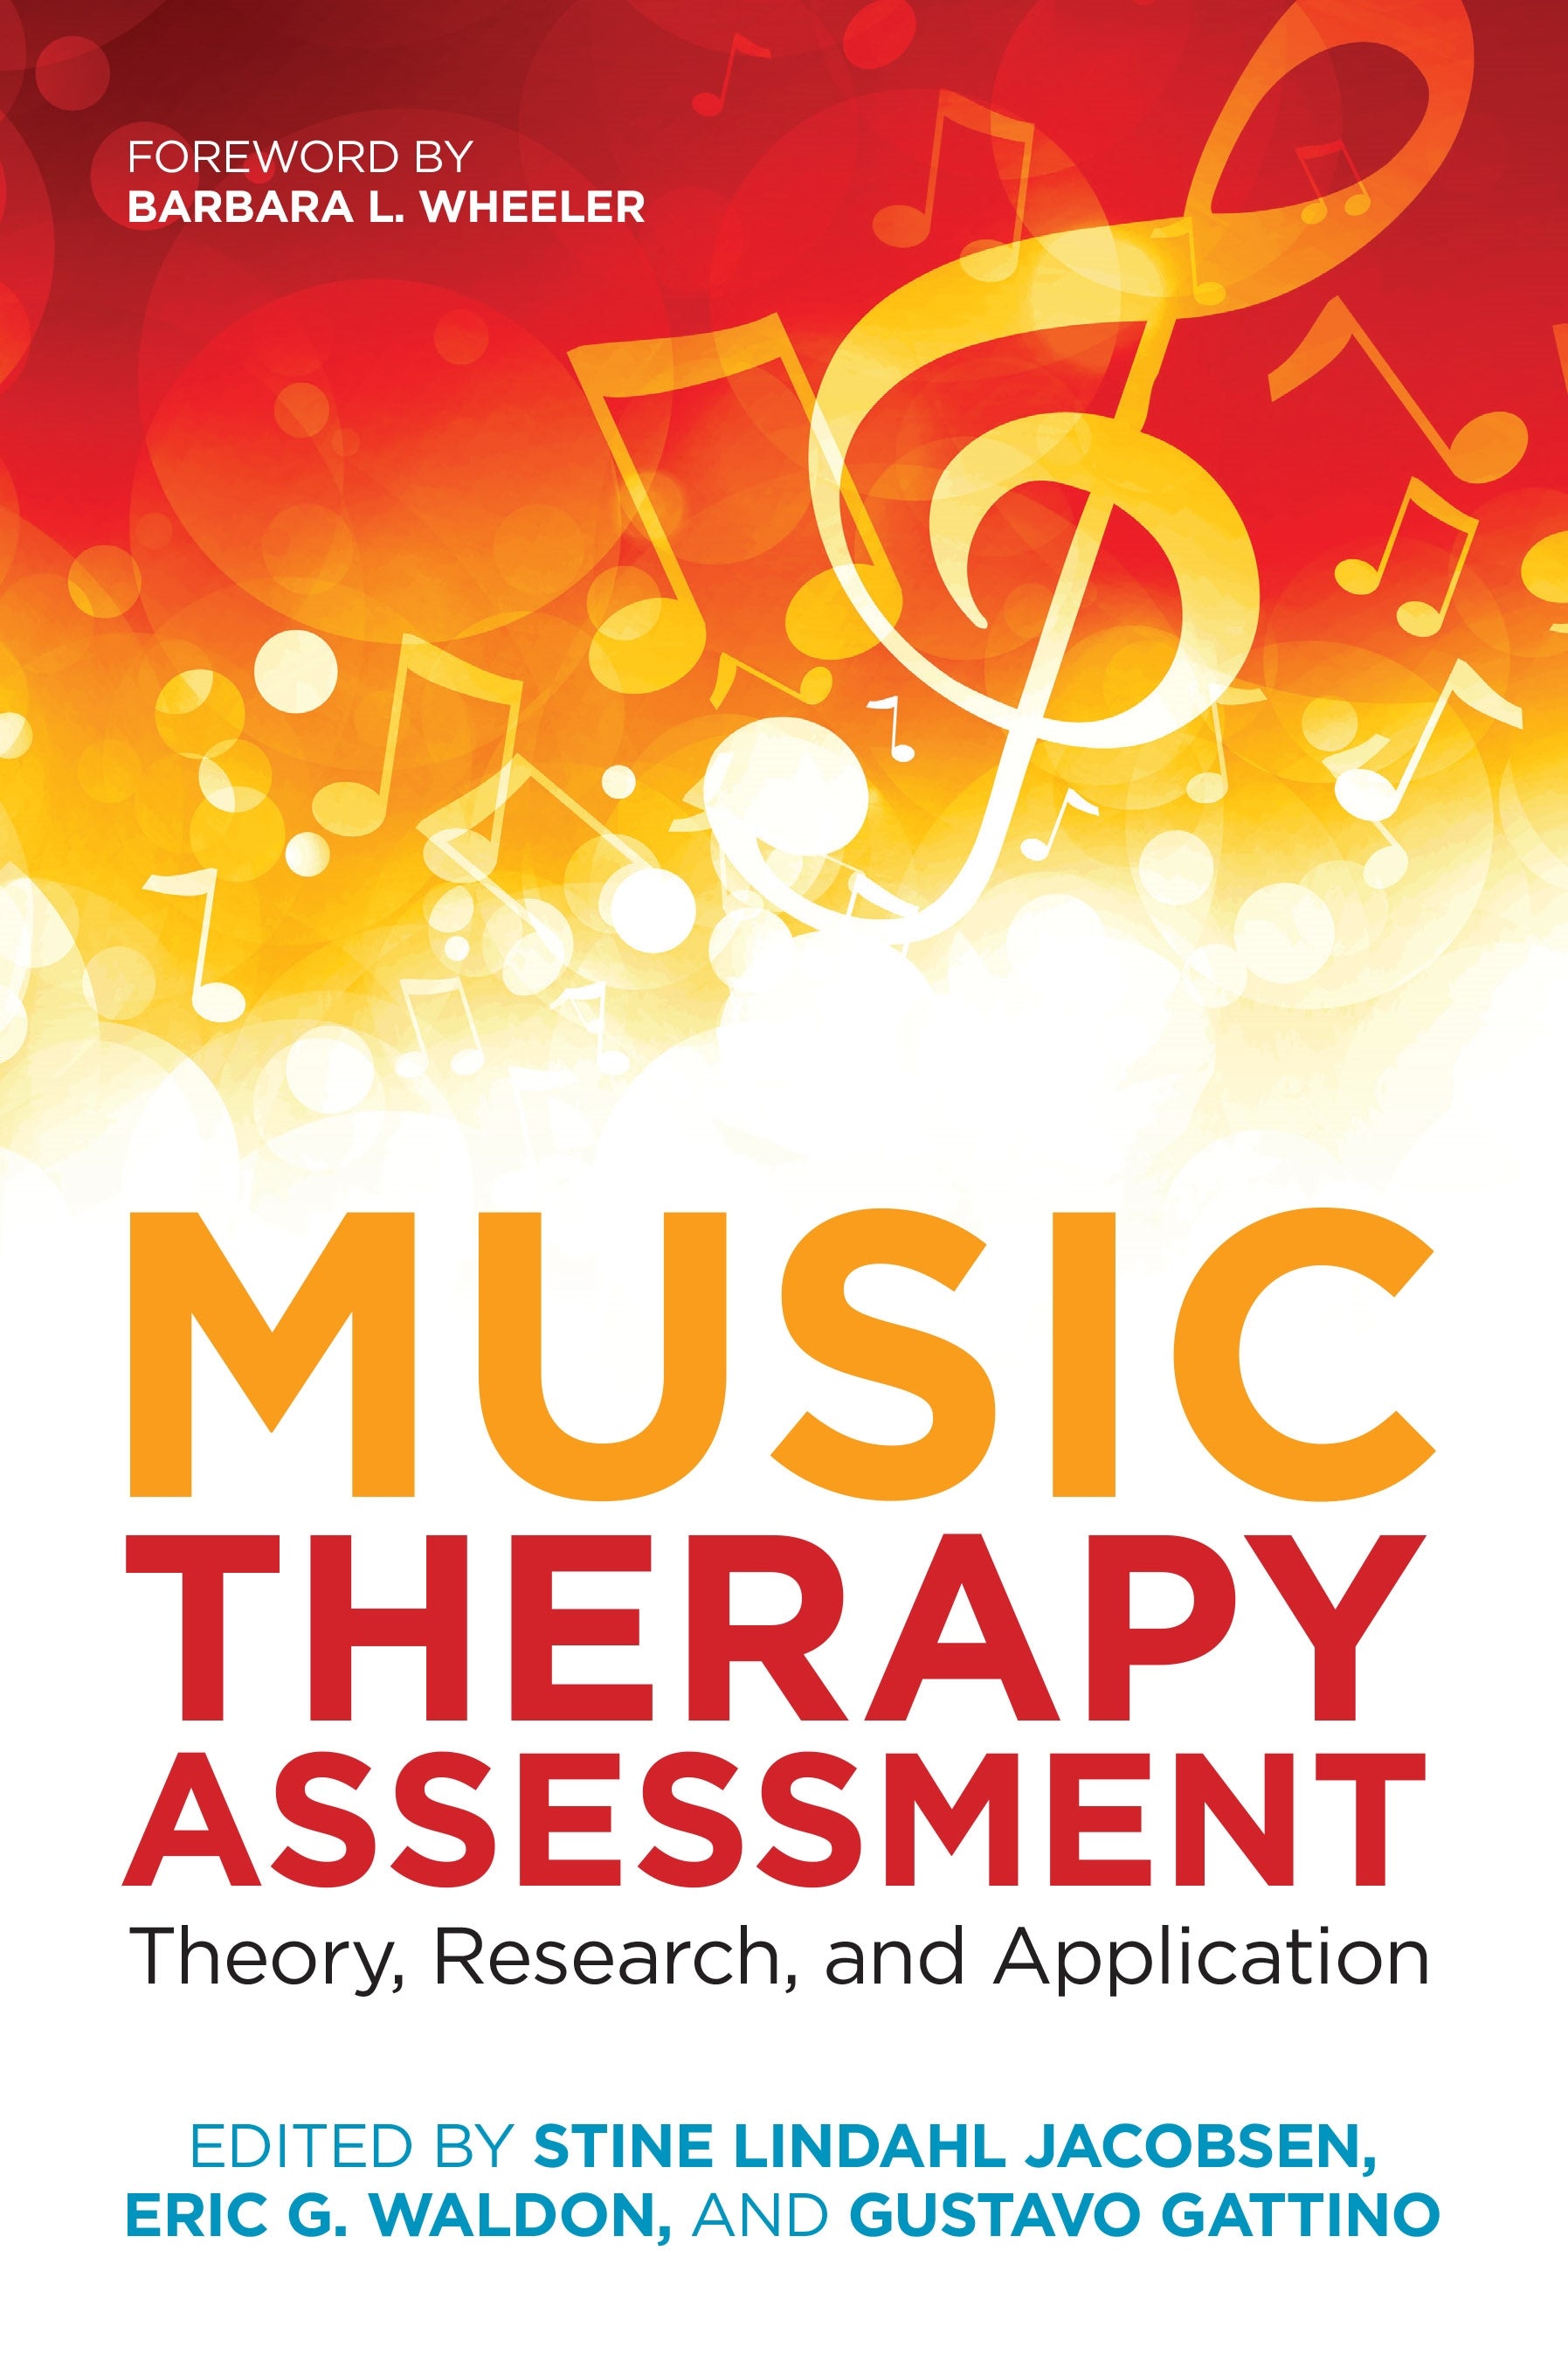 Music Therapy Assessment by Stine Lindahl Jacobsen, Barbara L. Wheeler, Eric G. Waldon, Gustavo Schulz Gattino, No Author Listed